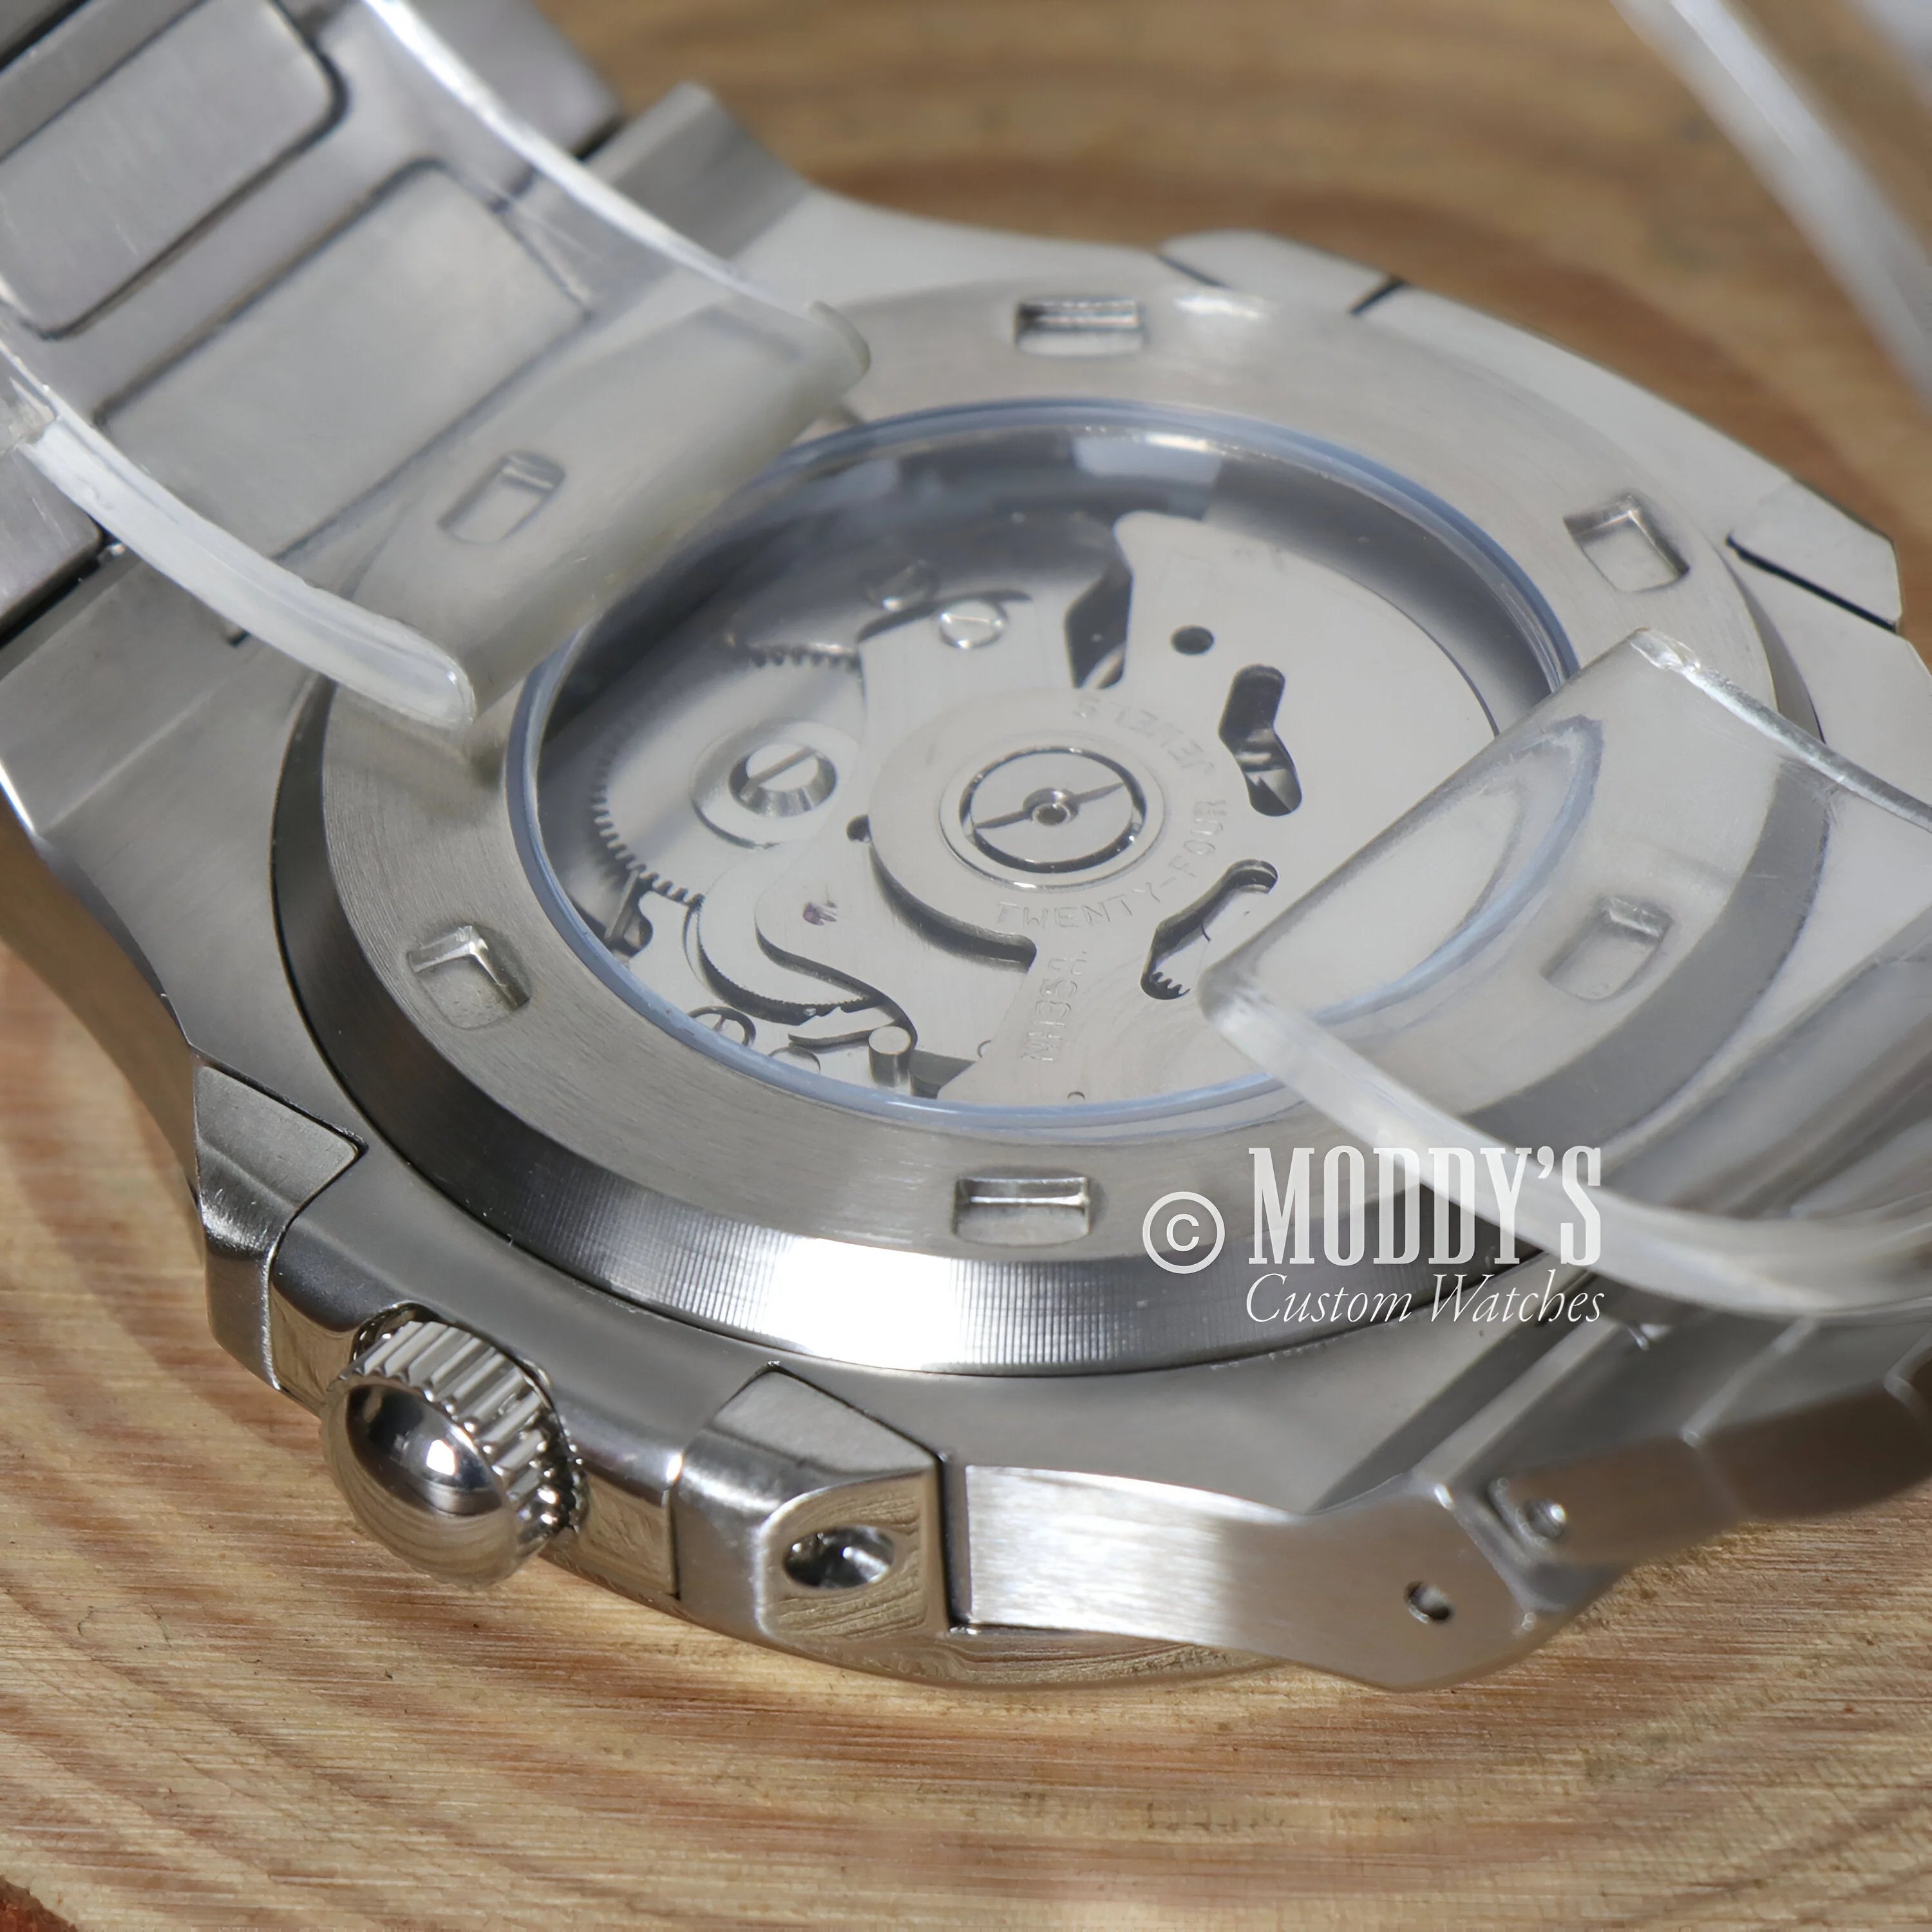 Luxury Nautiko White Watch With Open Back Case Showcasing Intricate Mechanical Movement